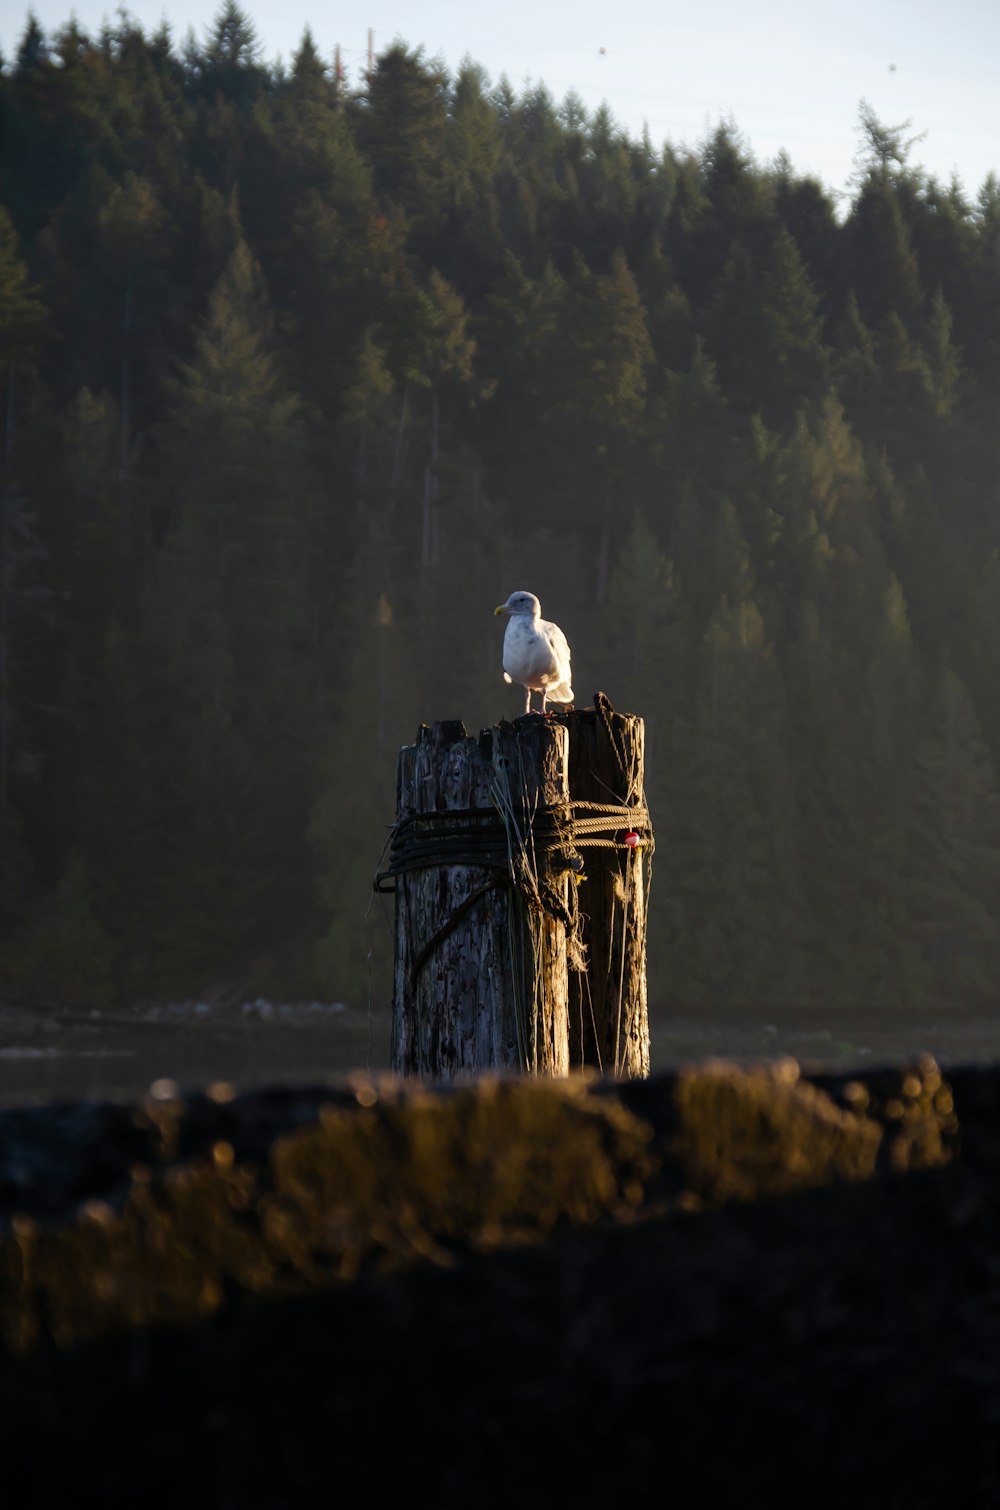 white bird on brown wooden post during daytime